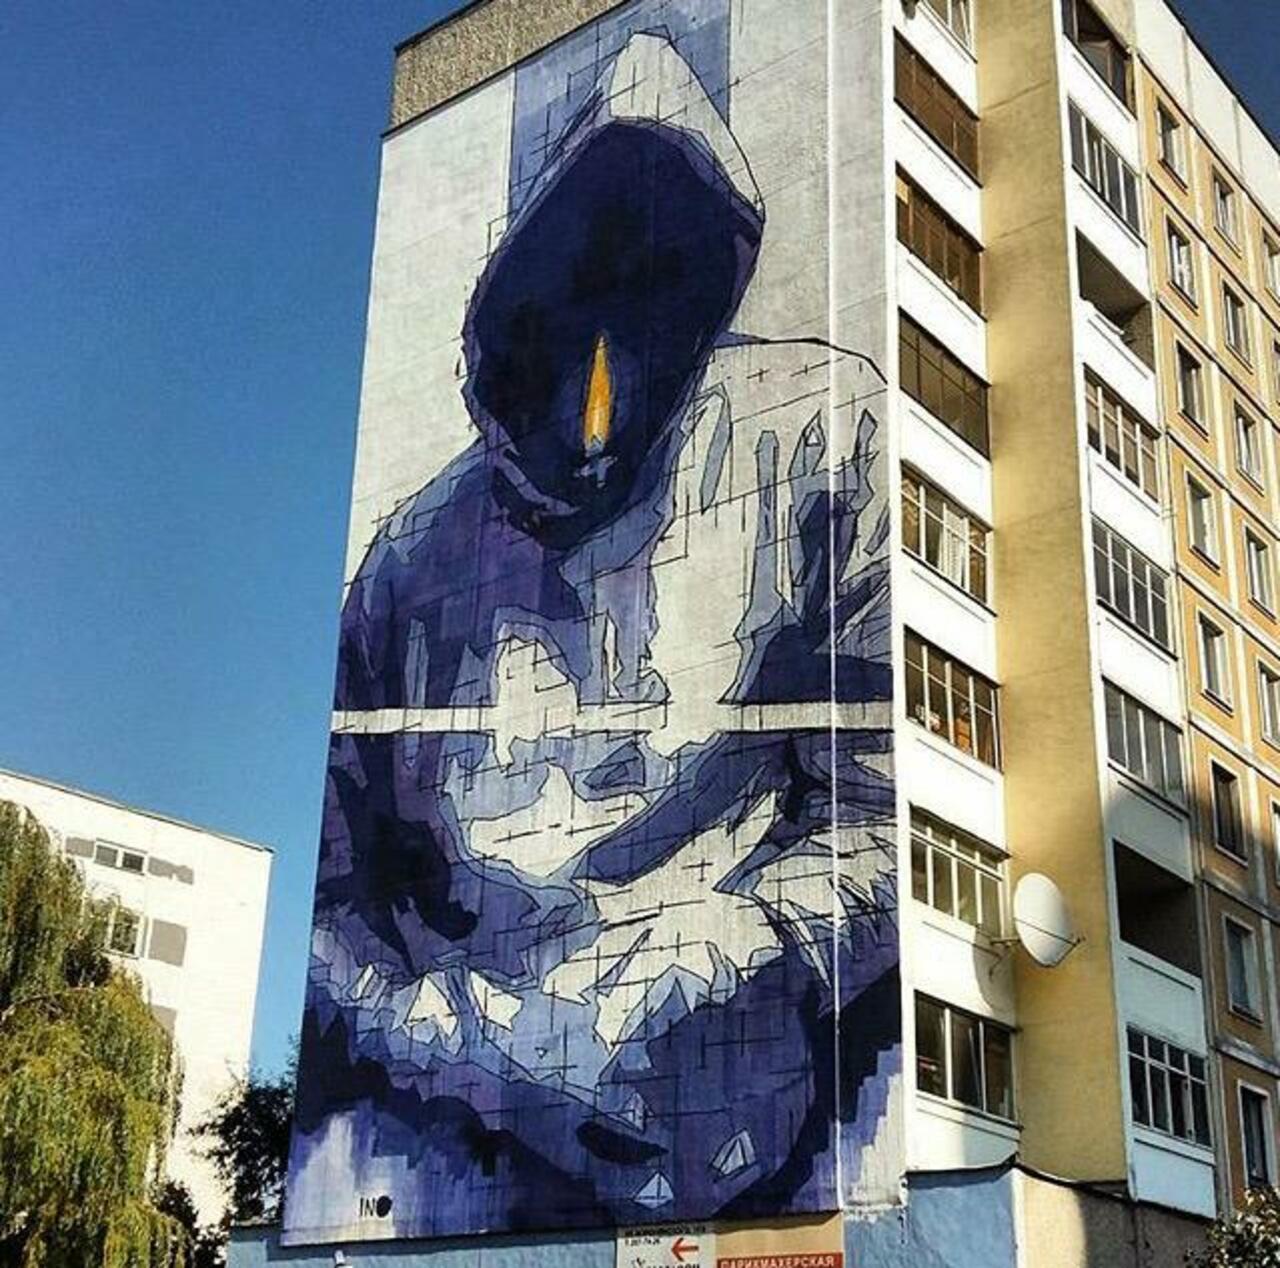 'Man With No Name' 
New Street Art by iNO in Minsk, Belarus 

#art #graffiti #mural #streetart http://t.co/mT5dqdRmqt